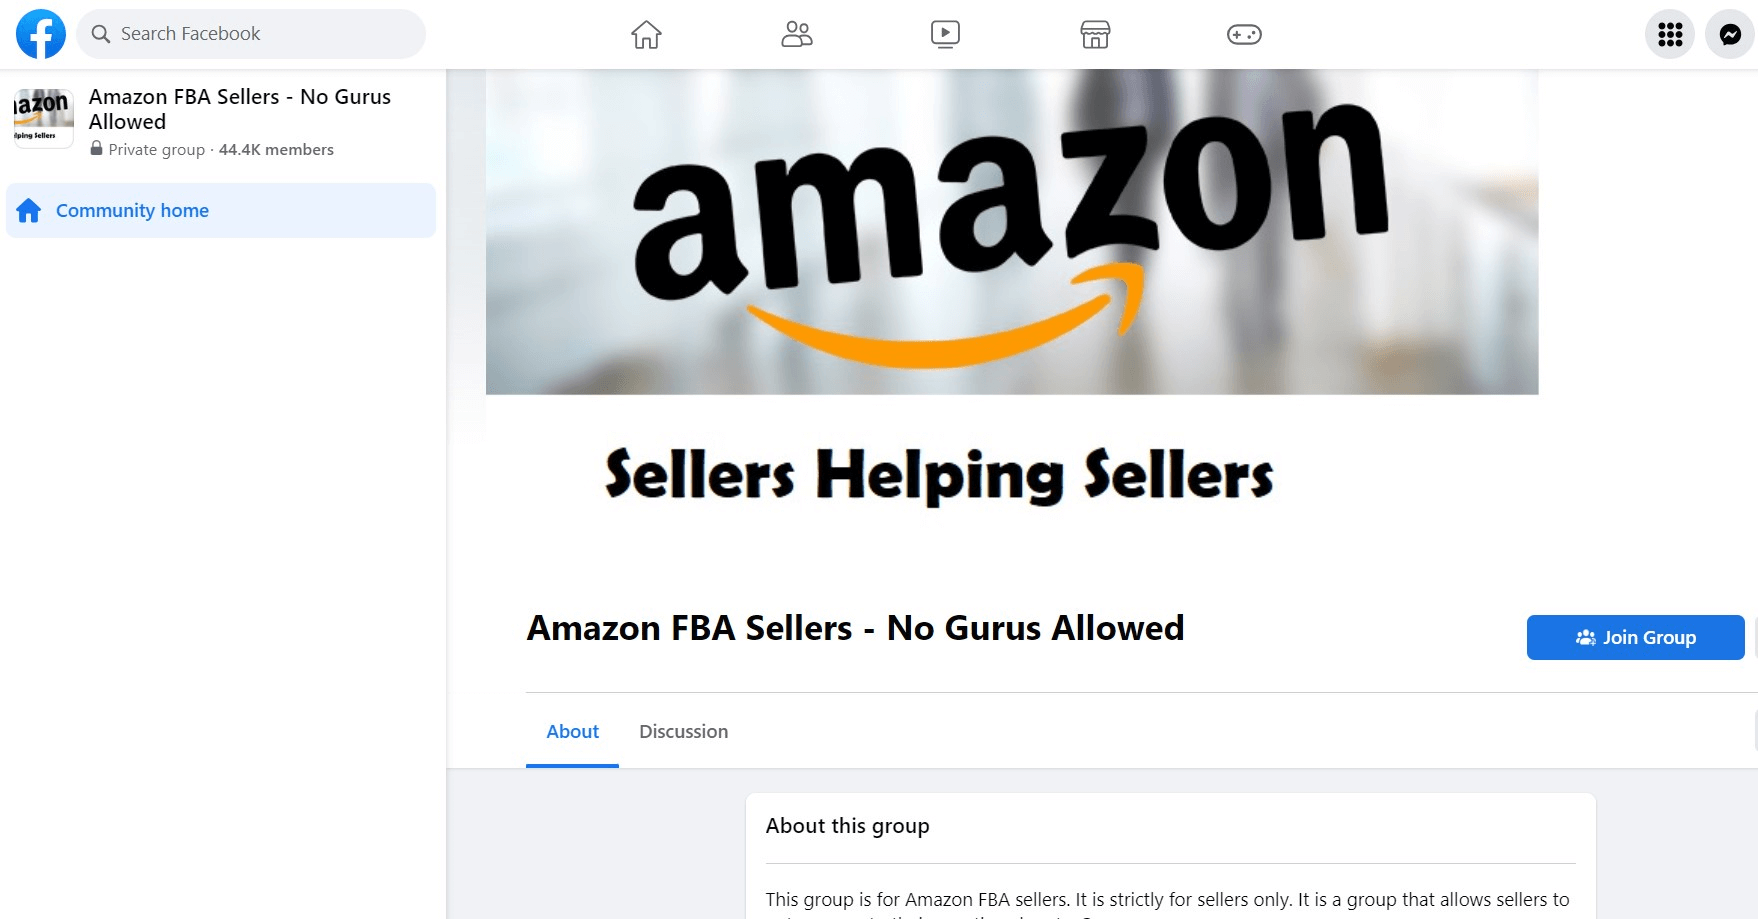 Amazon FBA Sellers - No Gurus Allowed